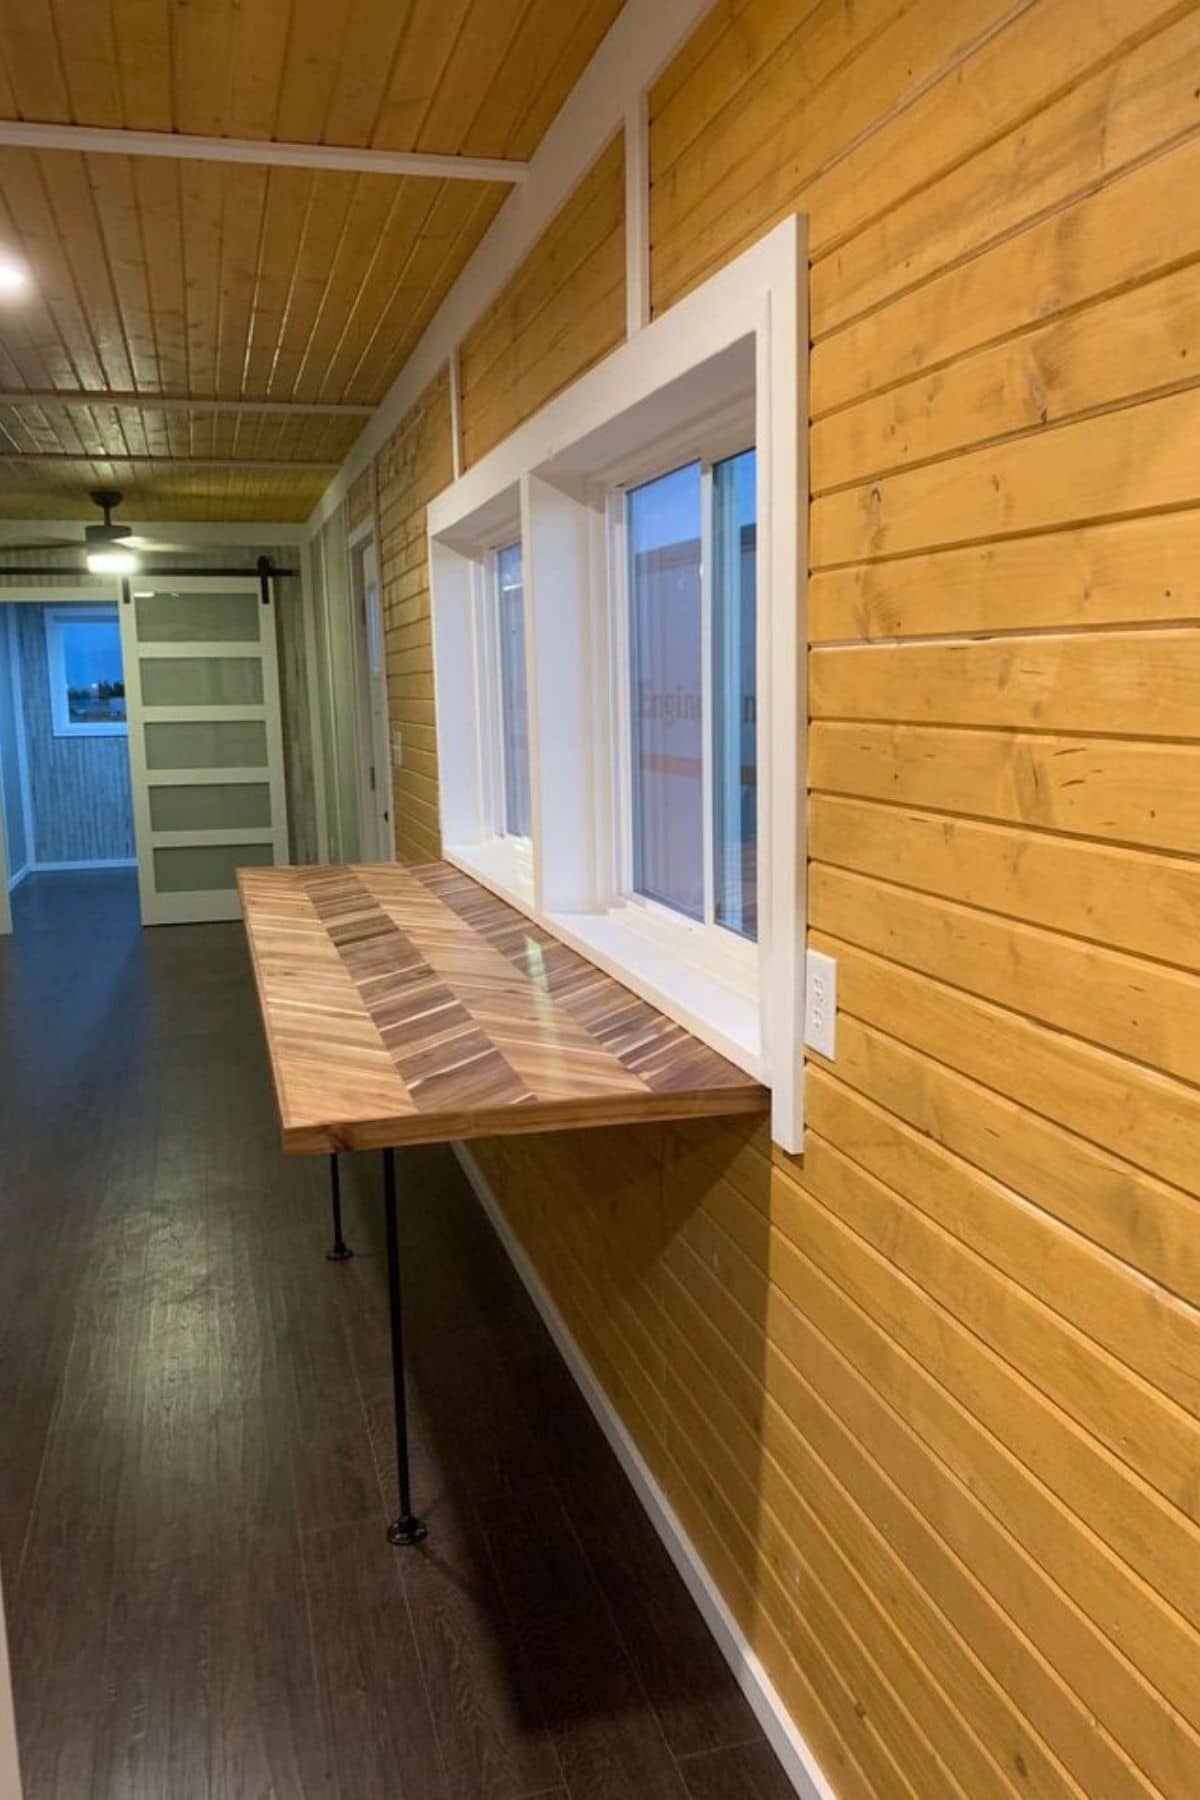 wood shelf underneath window with white trim